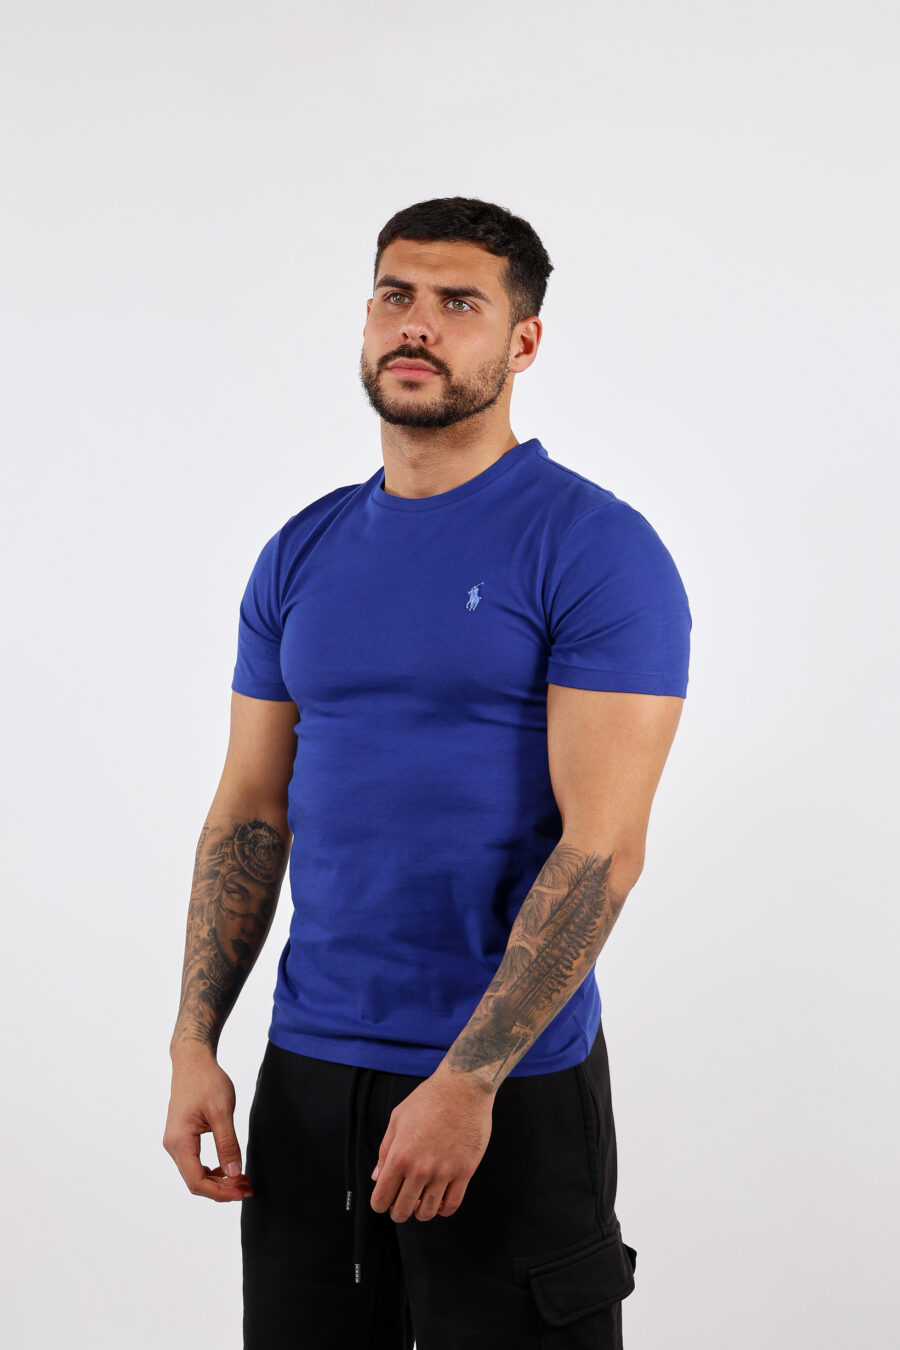 Camiseta azul con minilogo "polo" - BLS Fashion 281